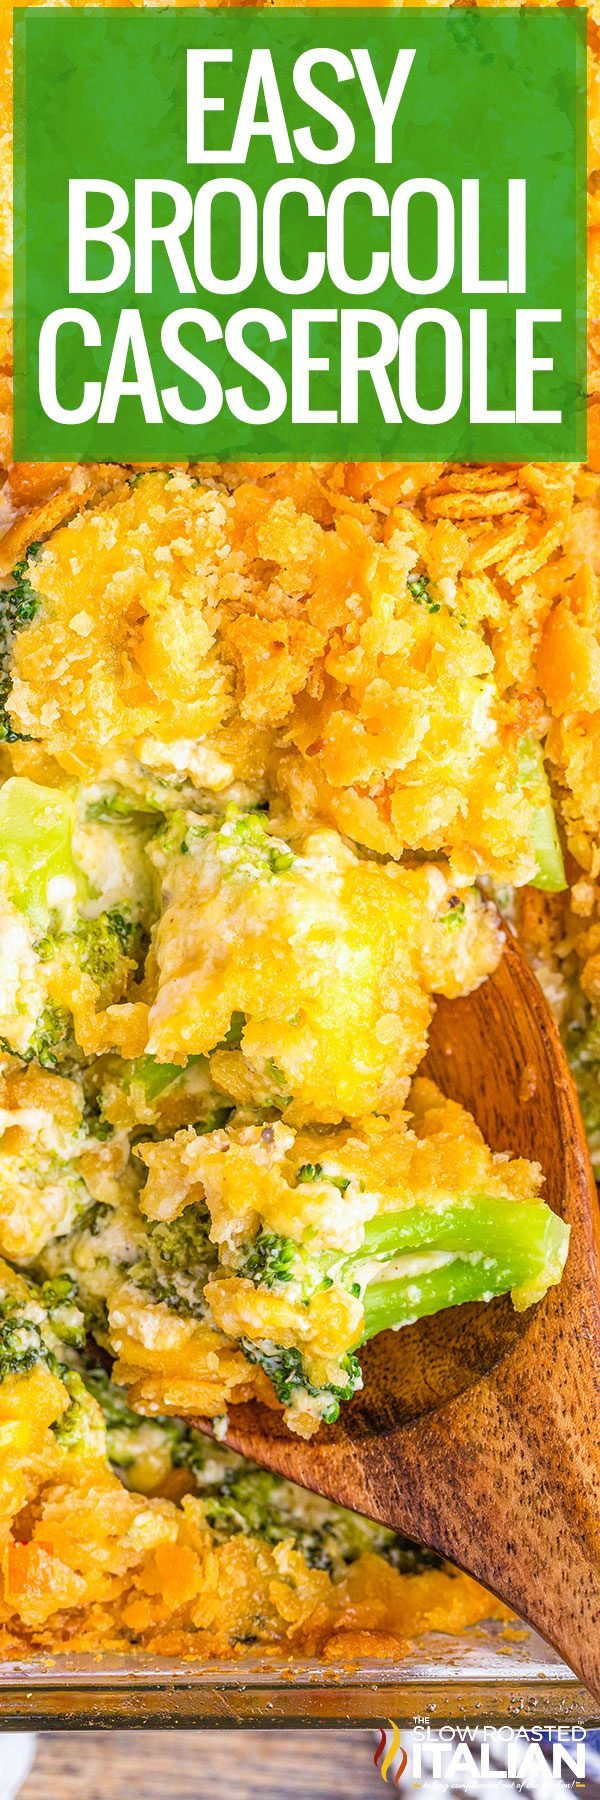 titled collage for easy broccoli casserole recipe